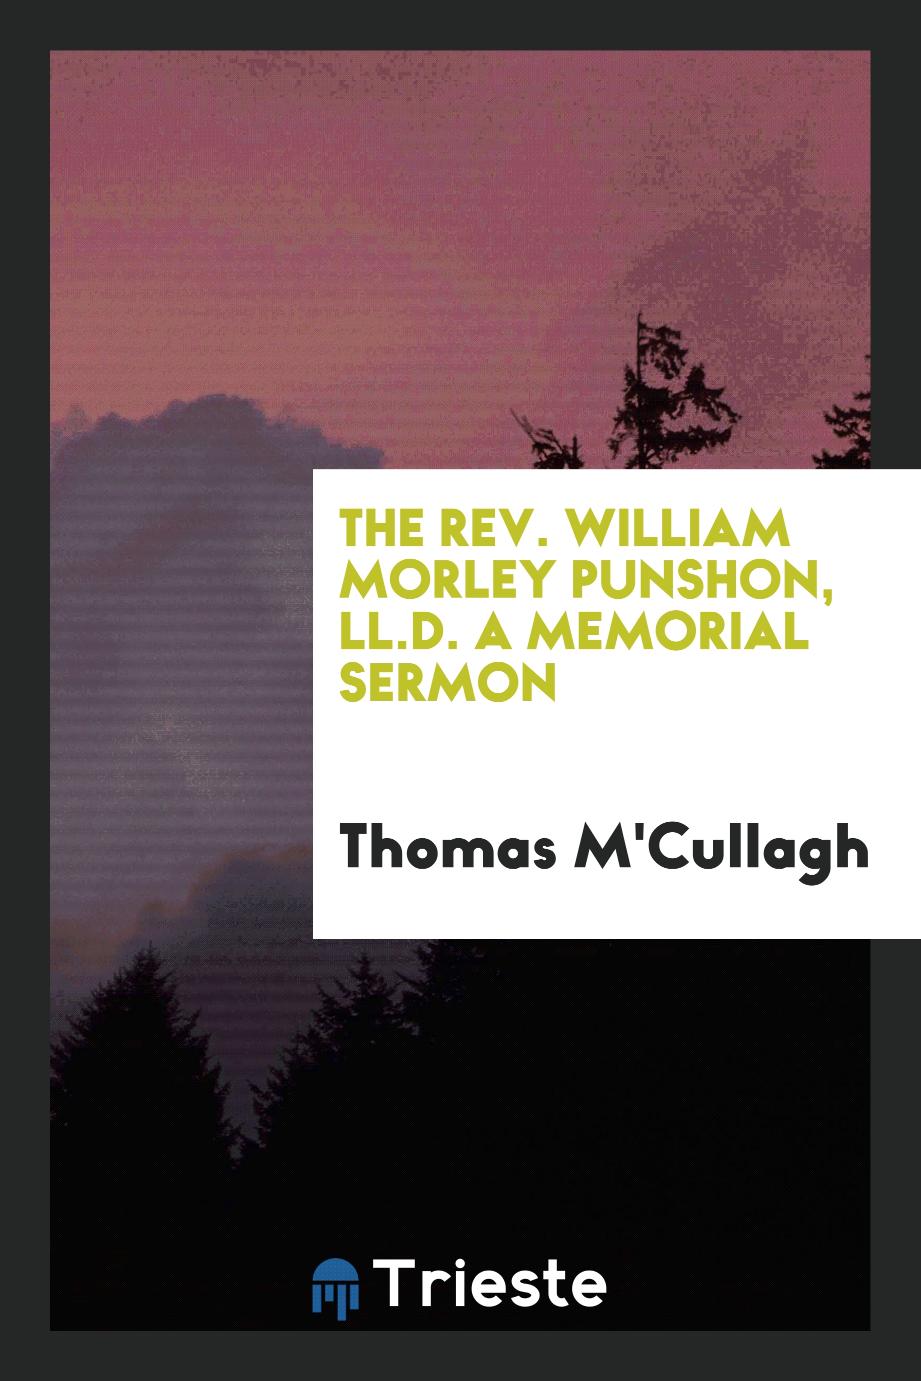 The rev. William Morley Punshon, LL.D. A Memorial Sermon